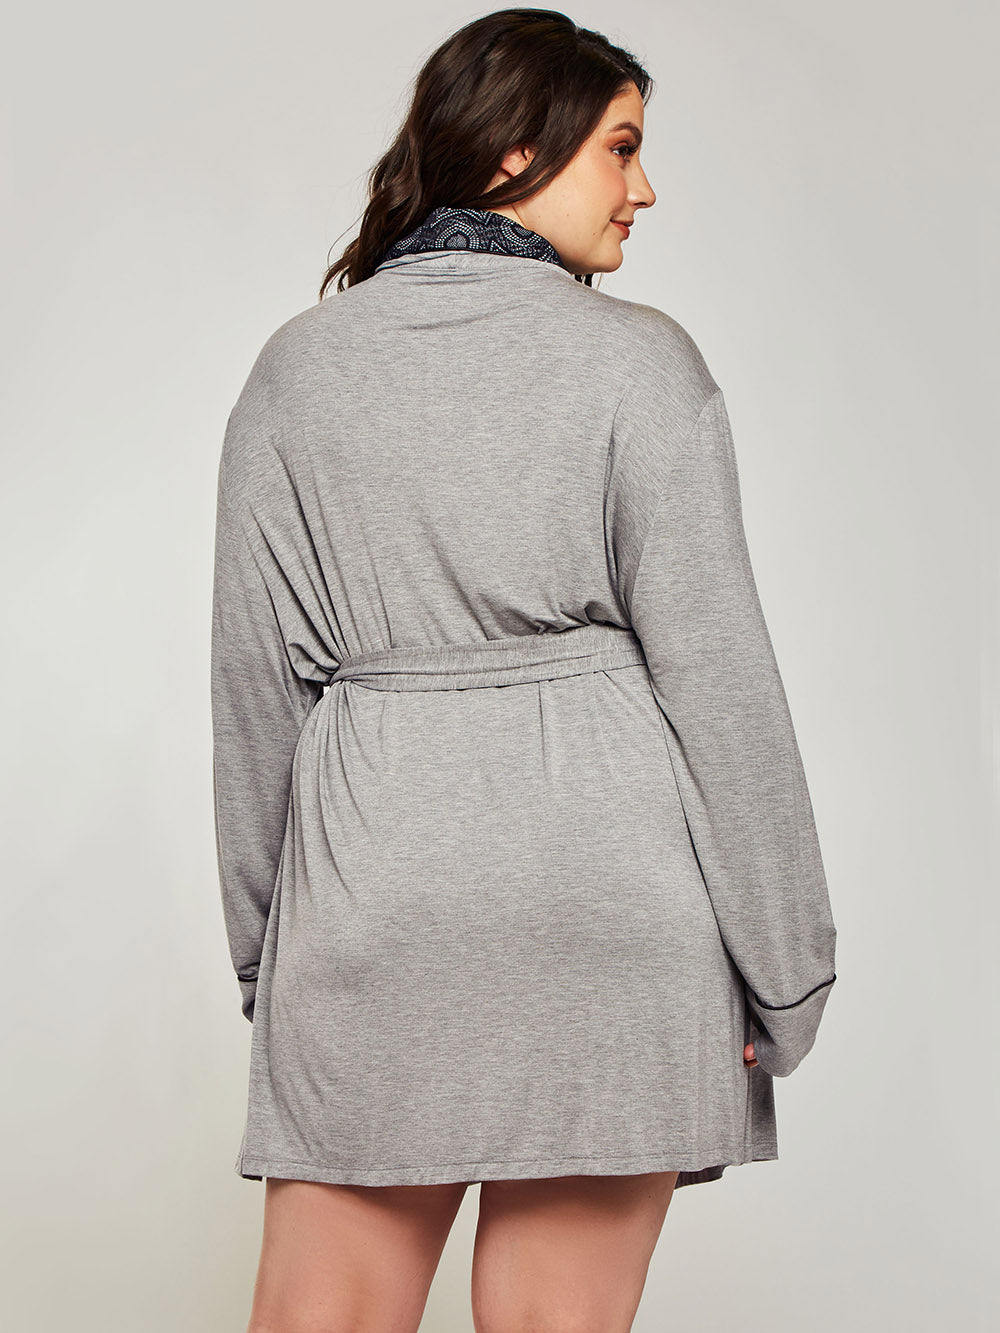 iCollection Plus Size Sleepwear Gray / 1X Rhea Plus Size Robe